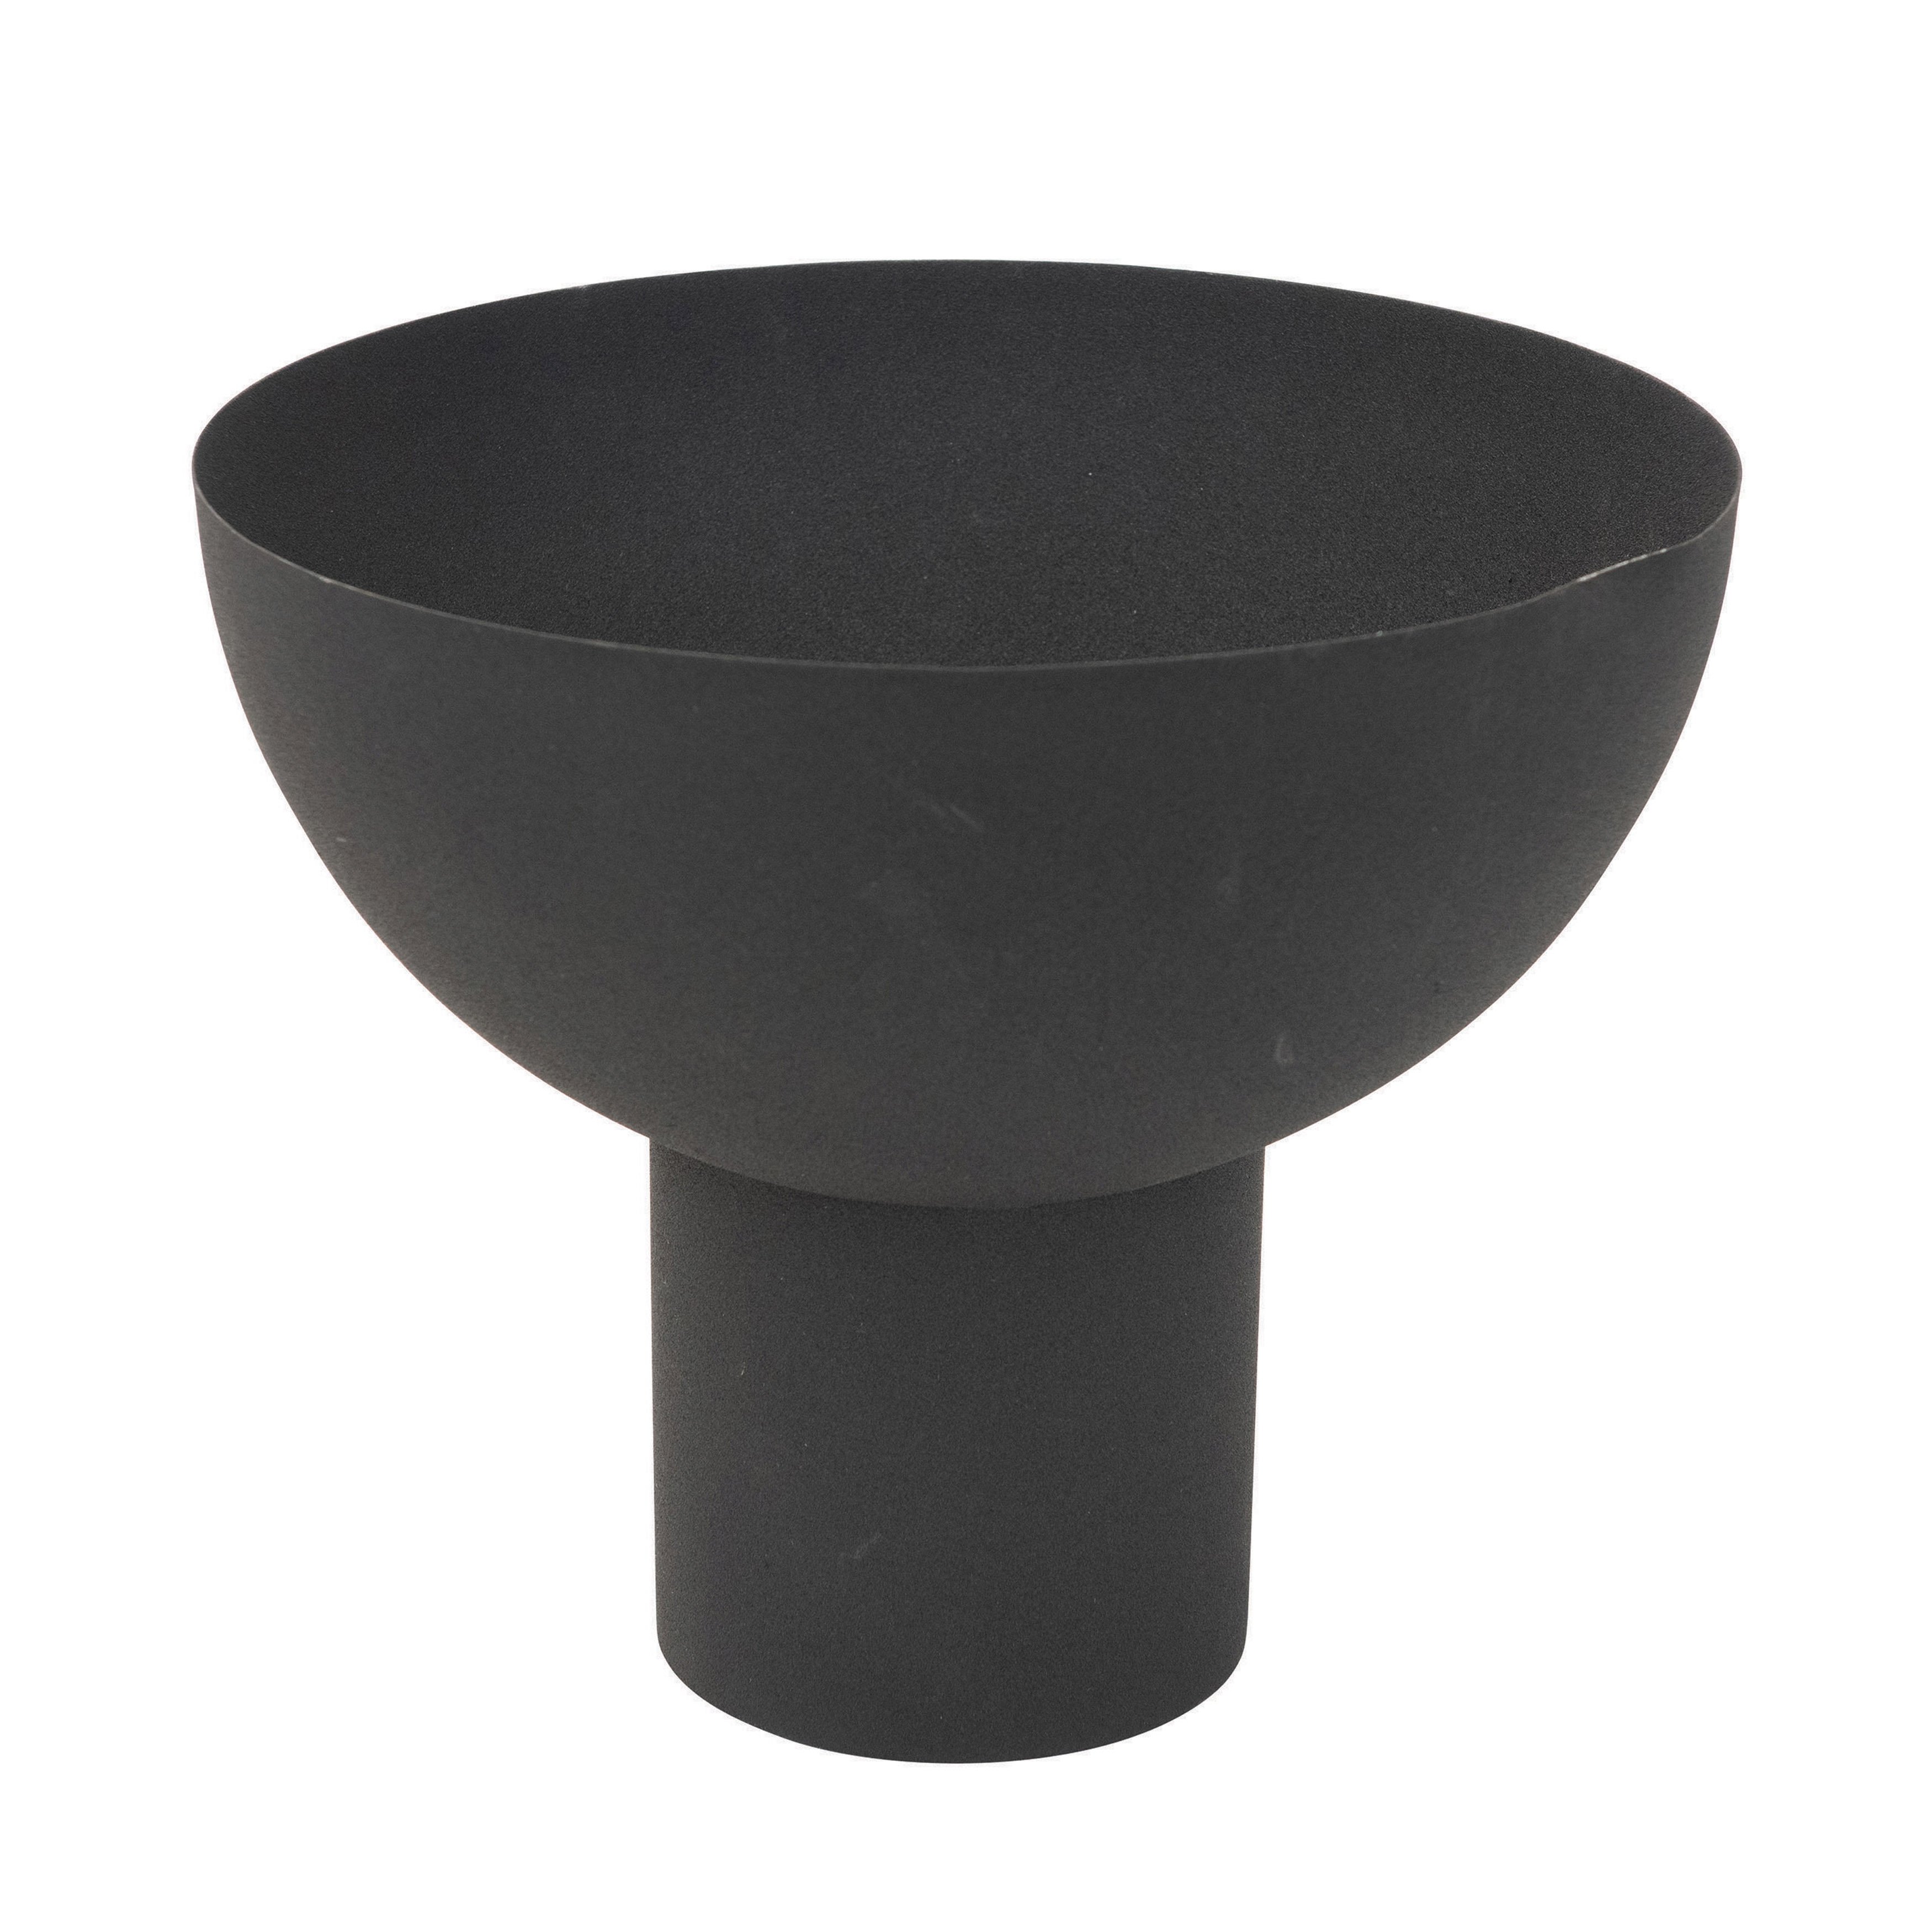 Decorative Metal Footed Bowl, Black - Image 0